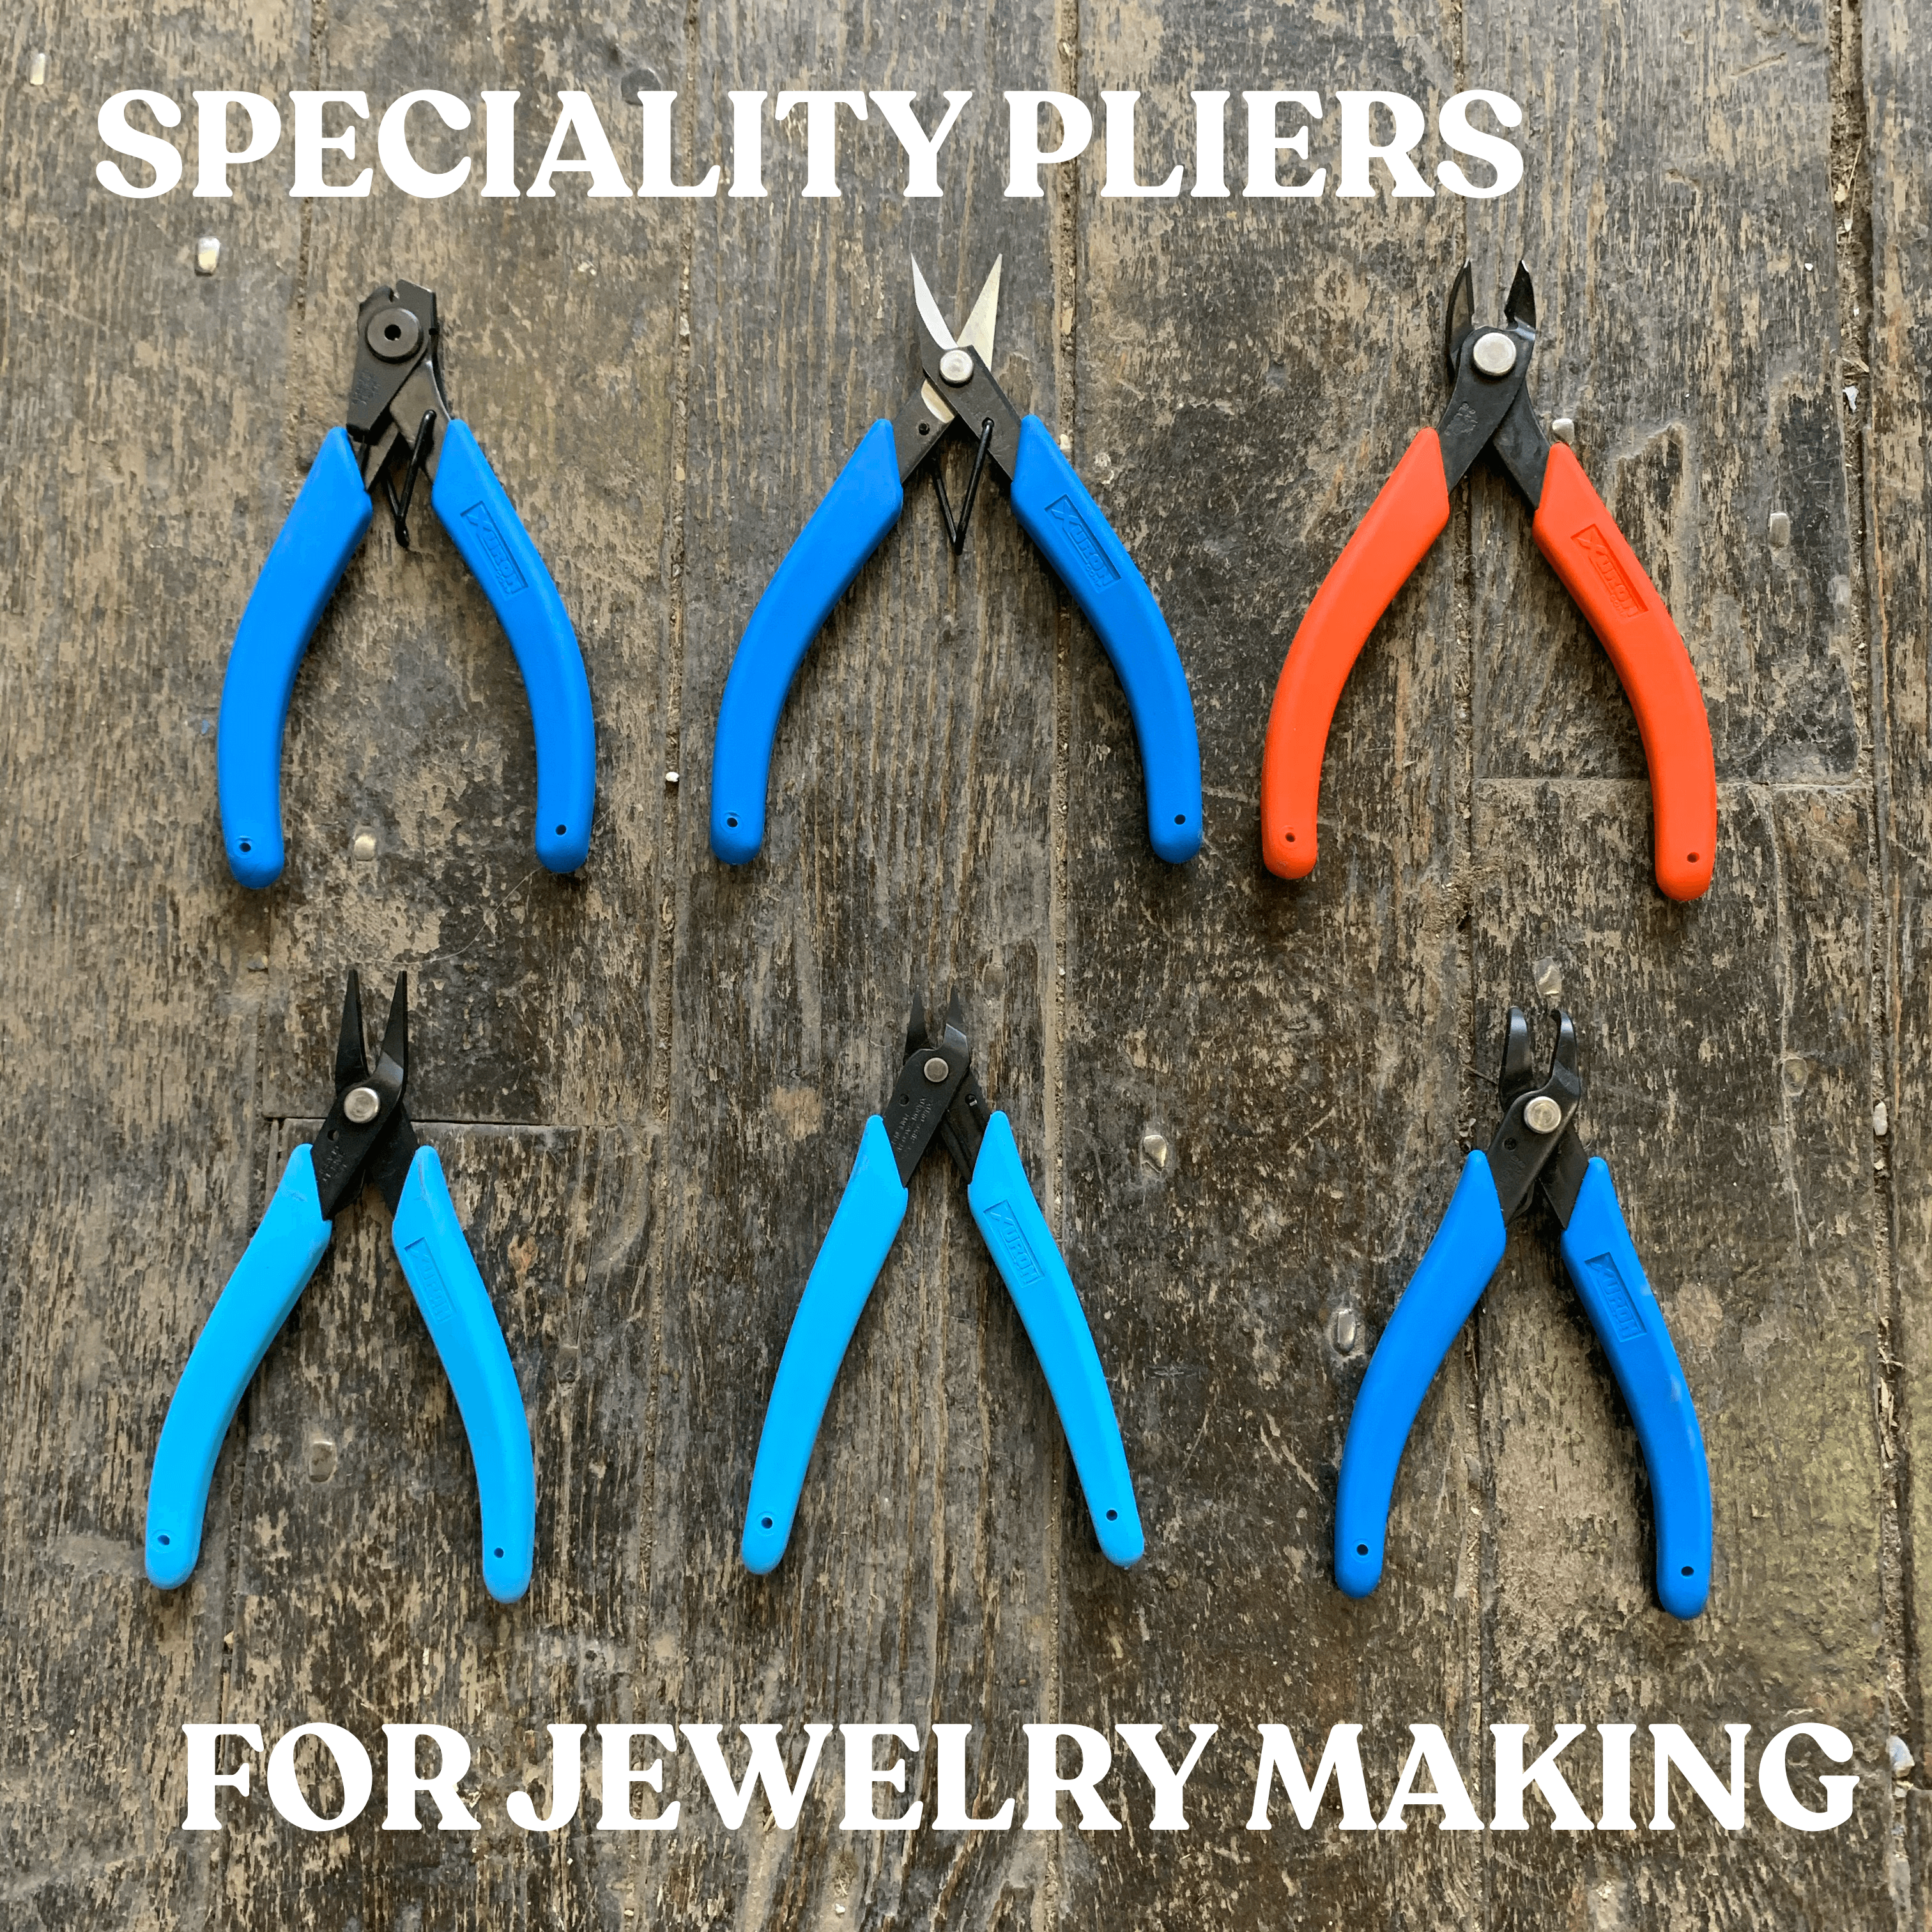 Jewelers Pliers - Specialty Jewelers Pliers, Jewelry Making